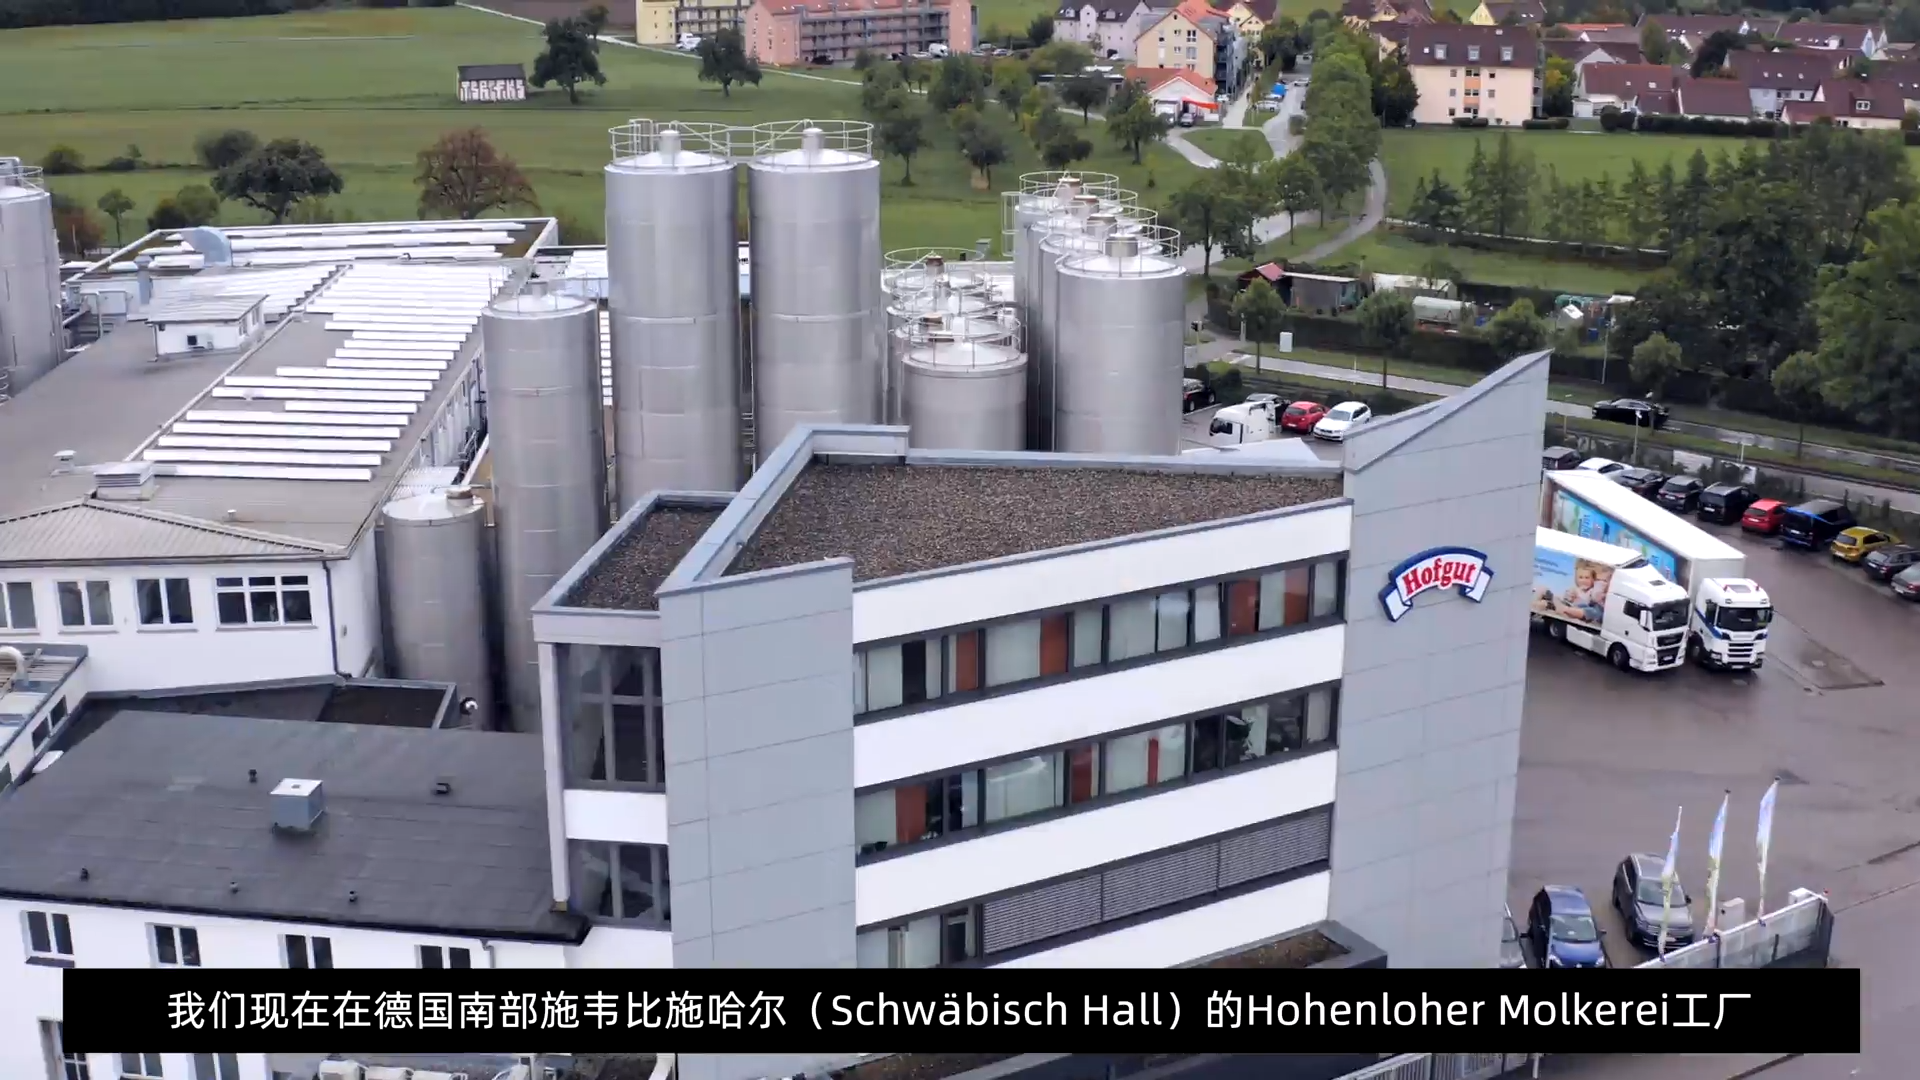 ifm 通过其IO-Link 技术帮助德国历史最悠久的乳品厂Hohenloher Molkerei